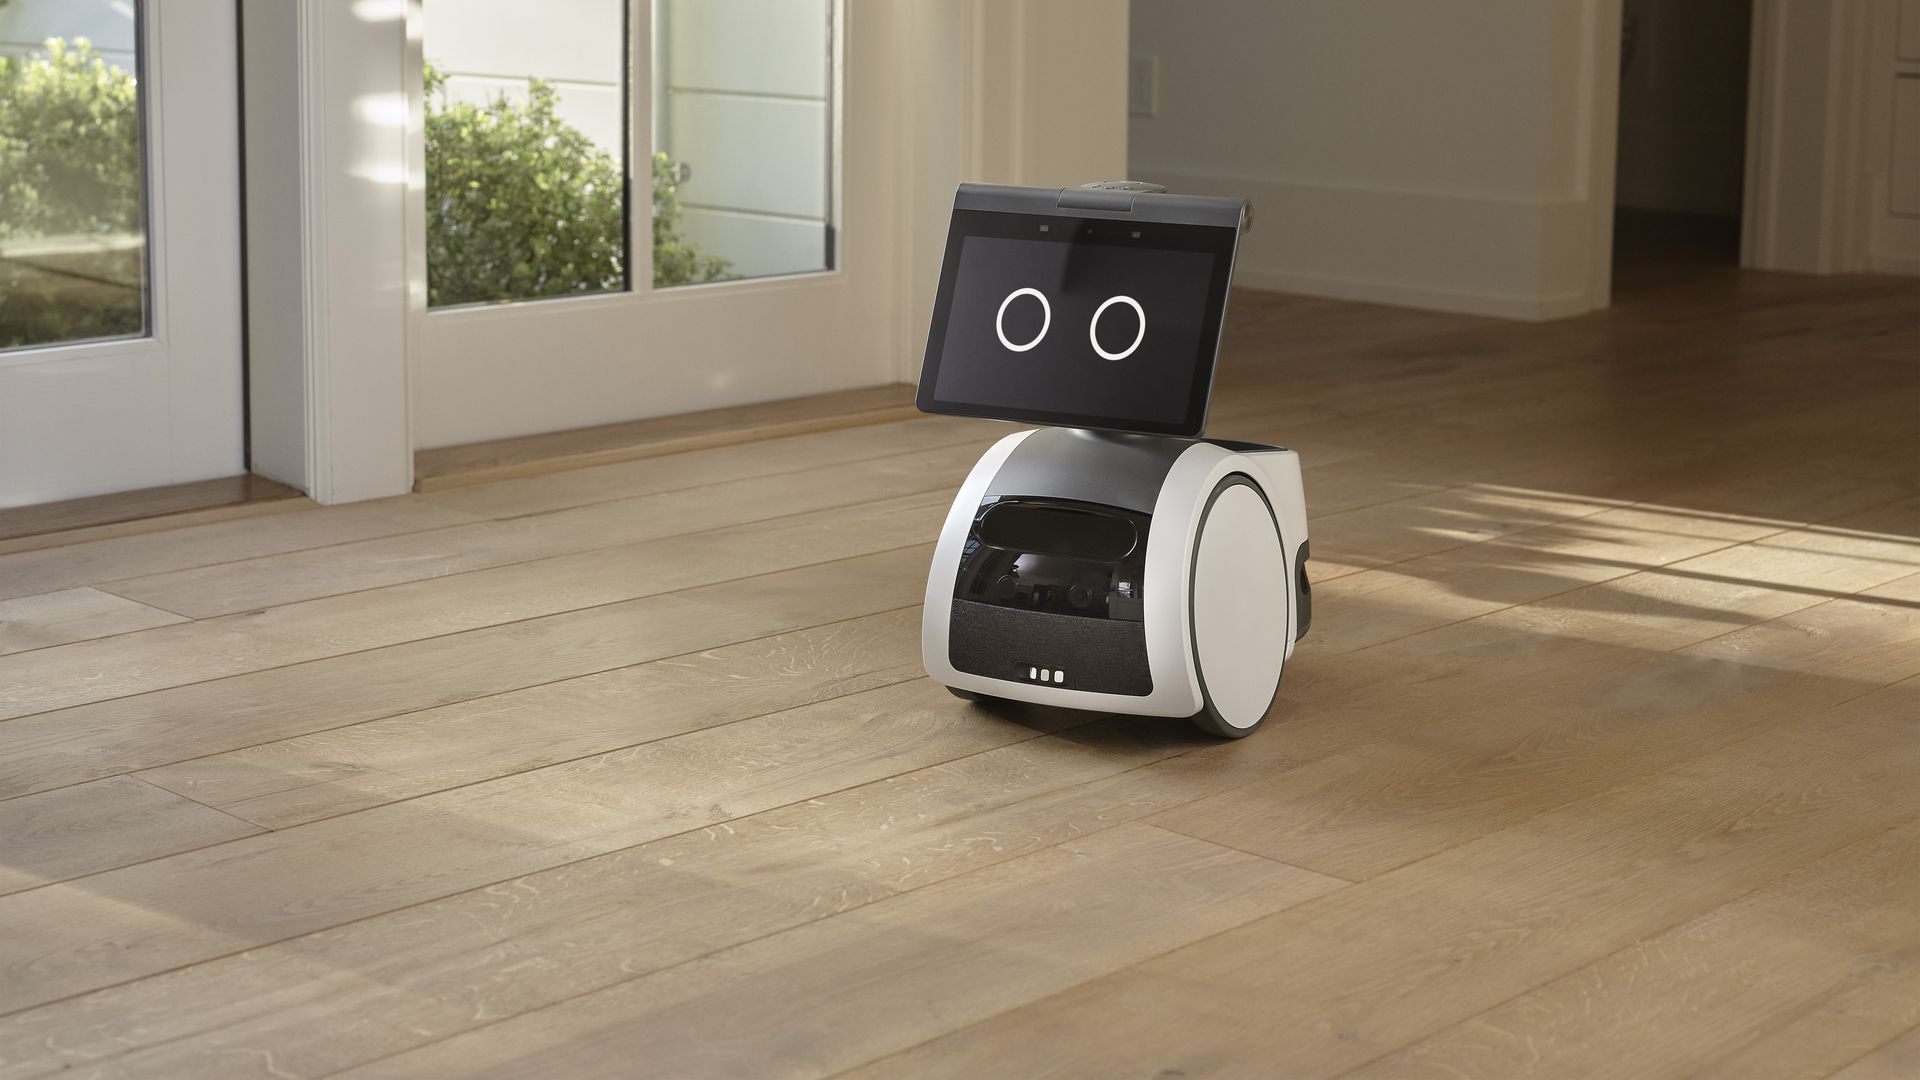 s new robot puts Alexa on wheels